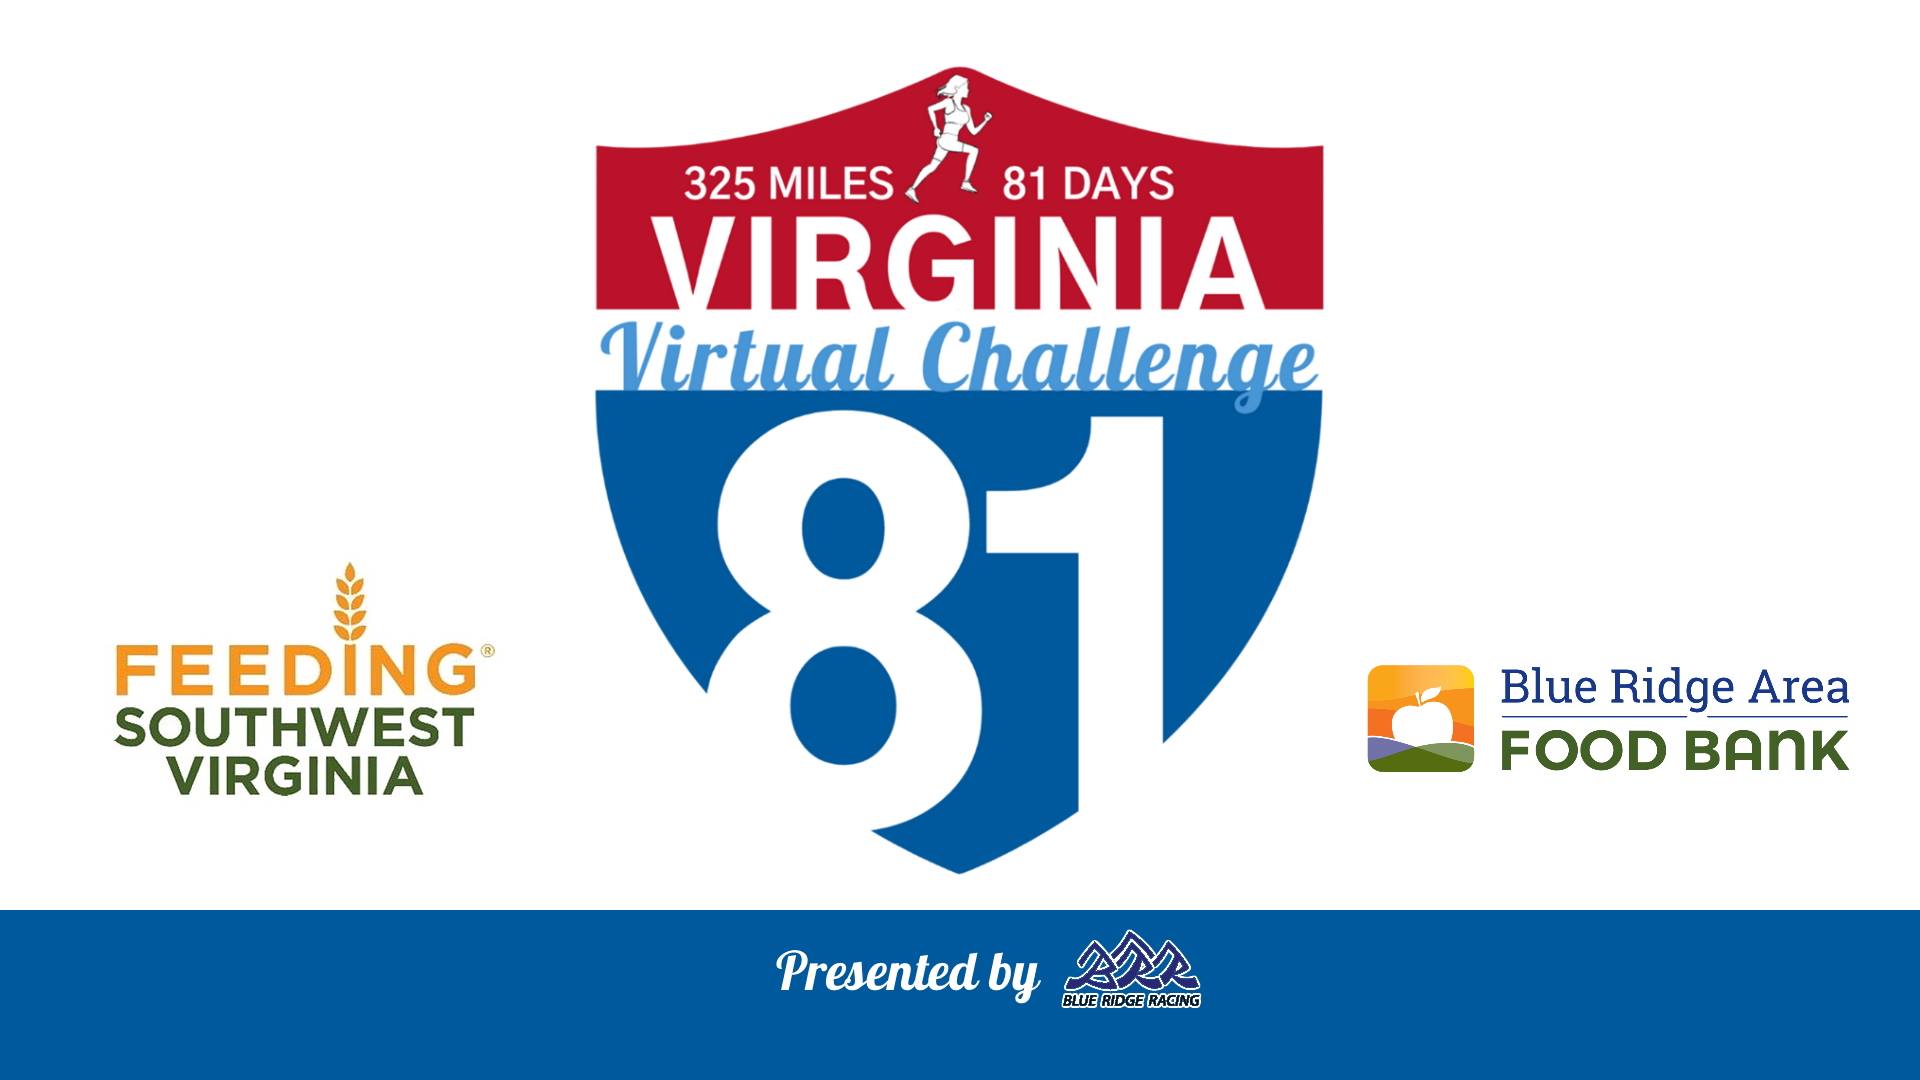 Virginia Virtual Challenge - Interstate 81